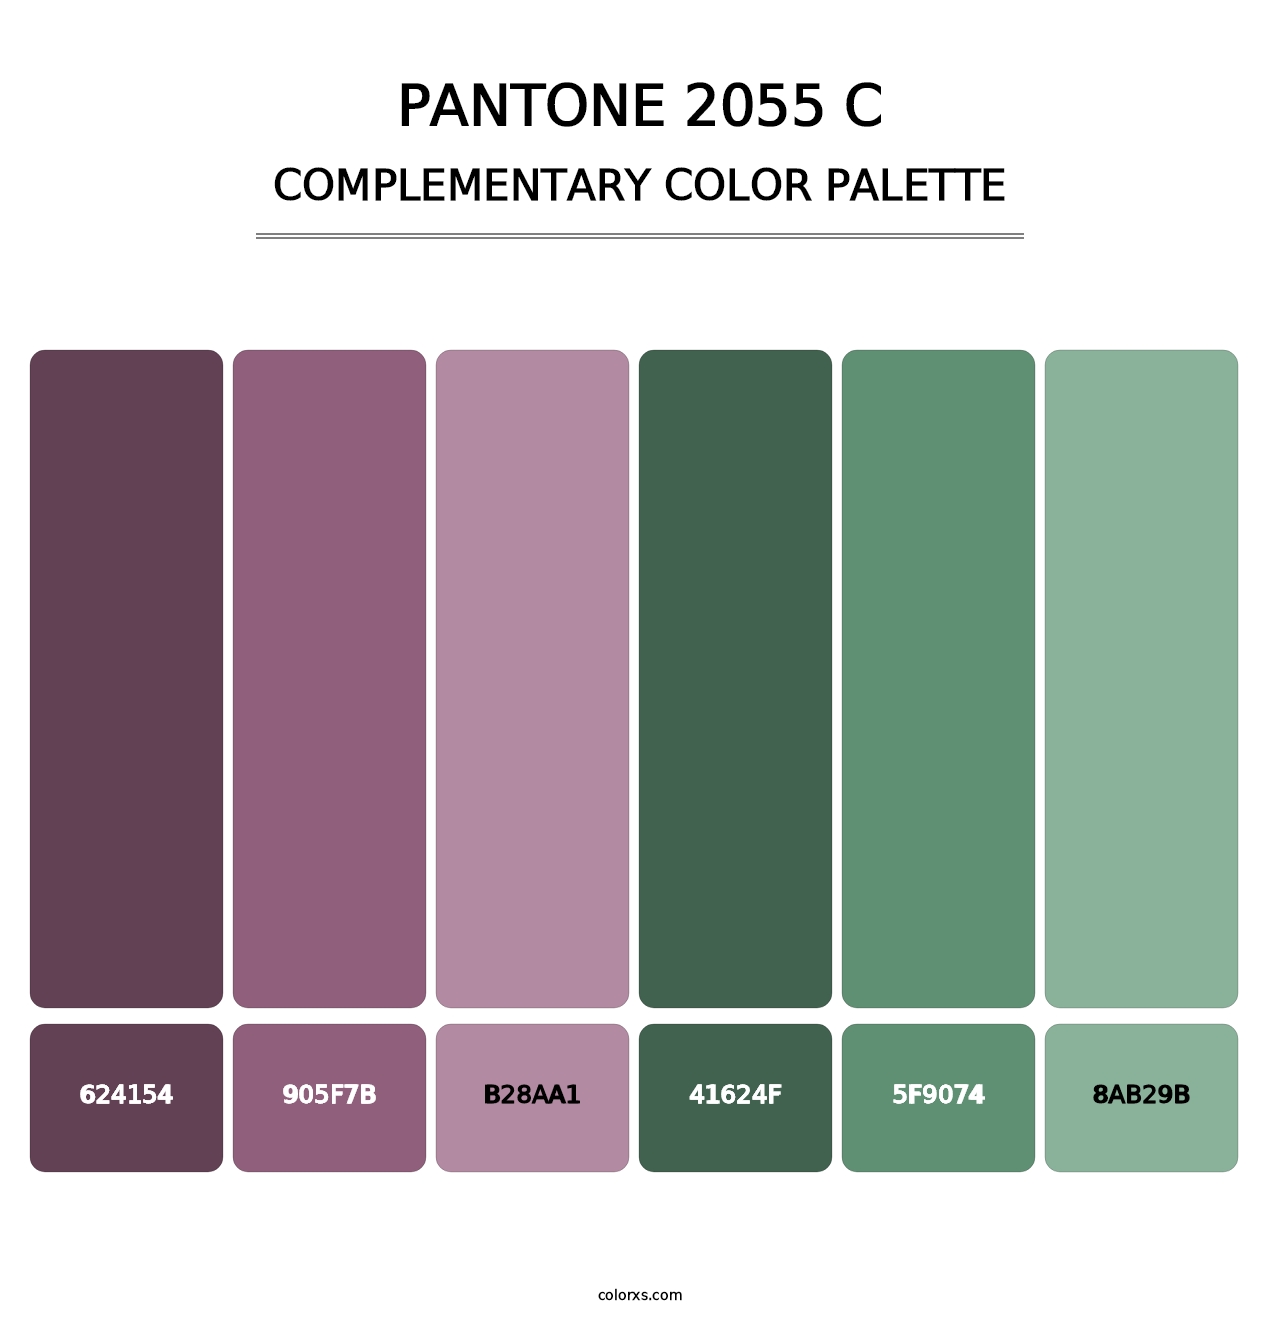 PANTONE 2055 C - Complementary Color Palette